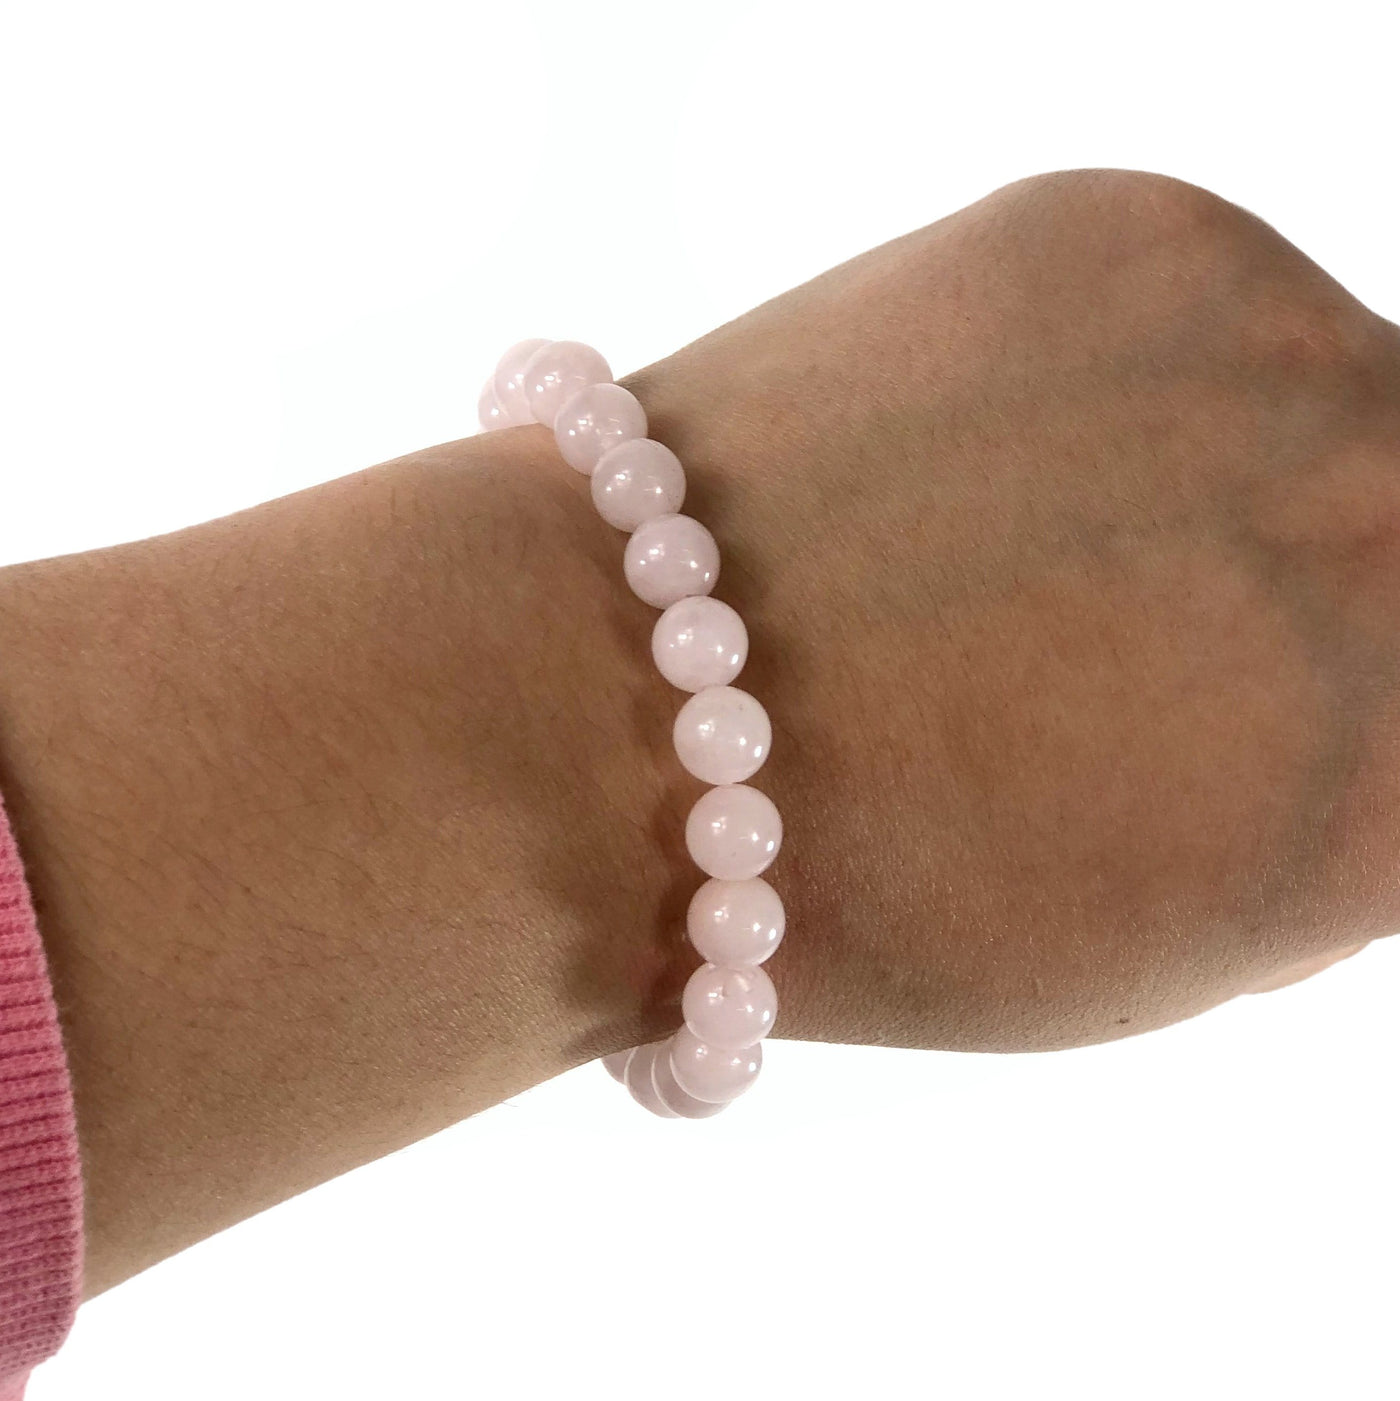 rose quartz healing stone bracelet being worn with white background